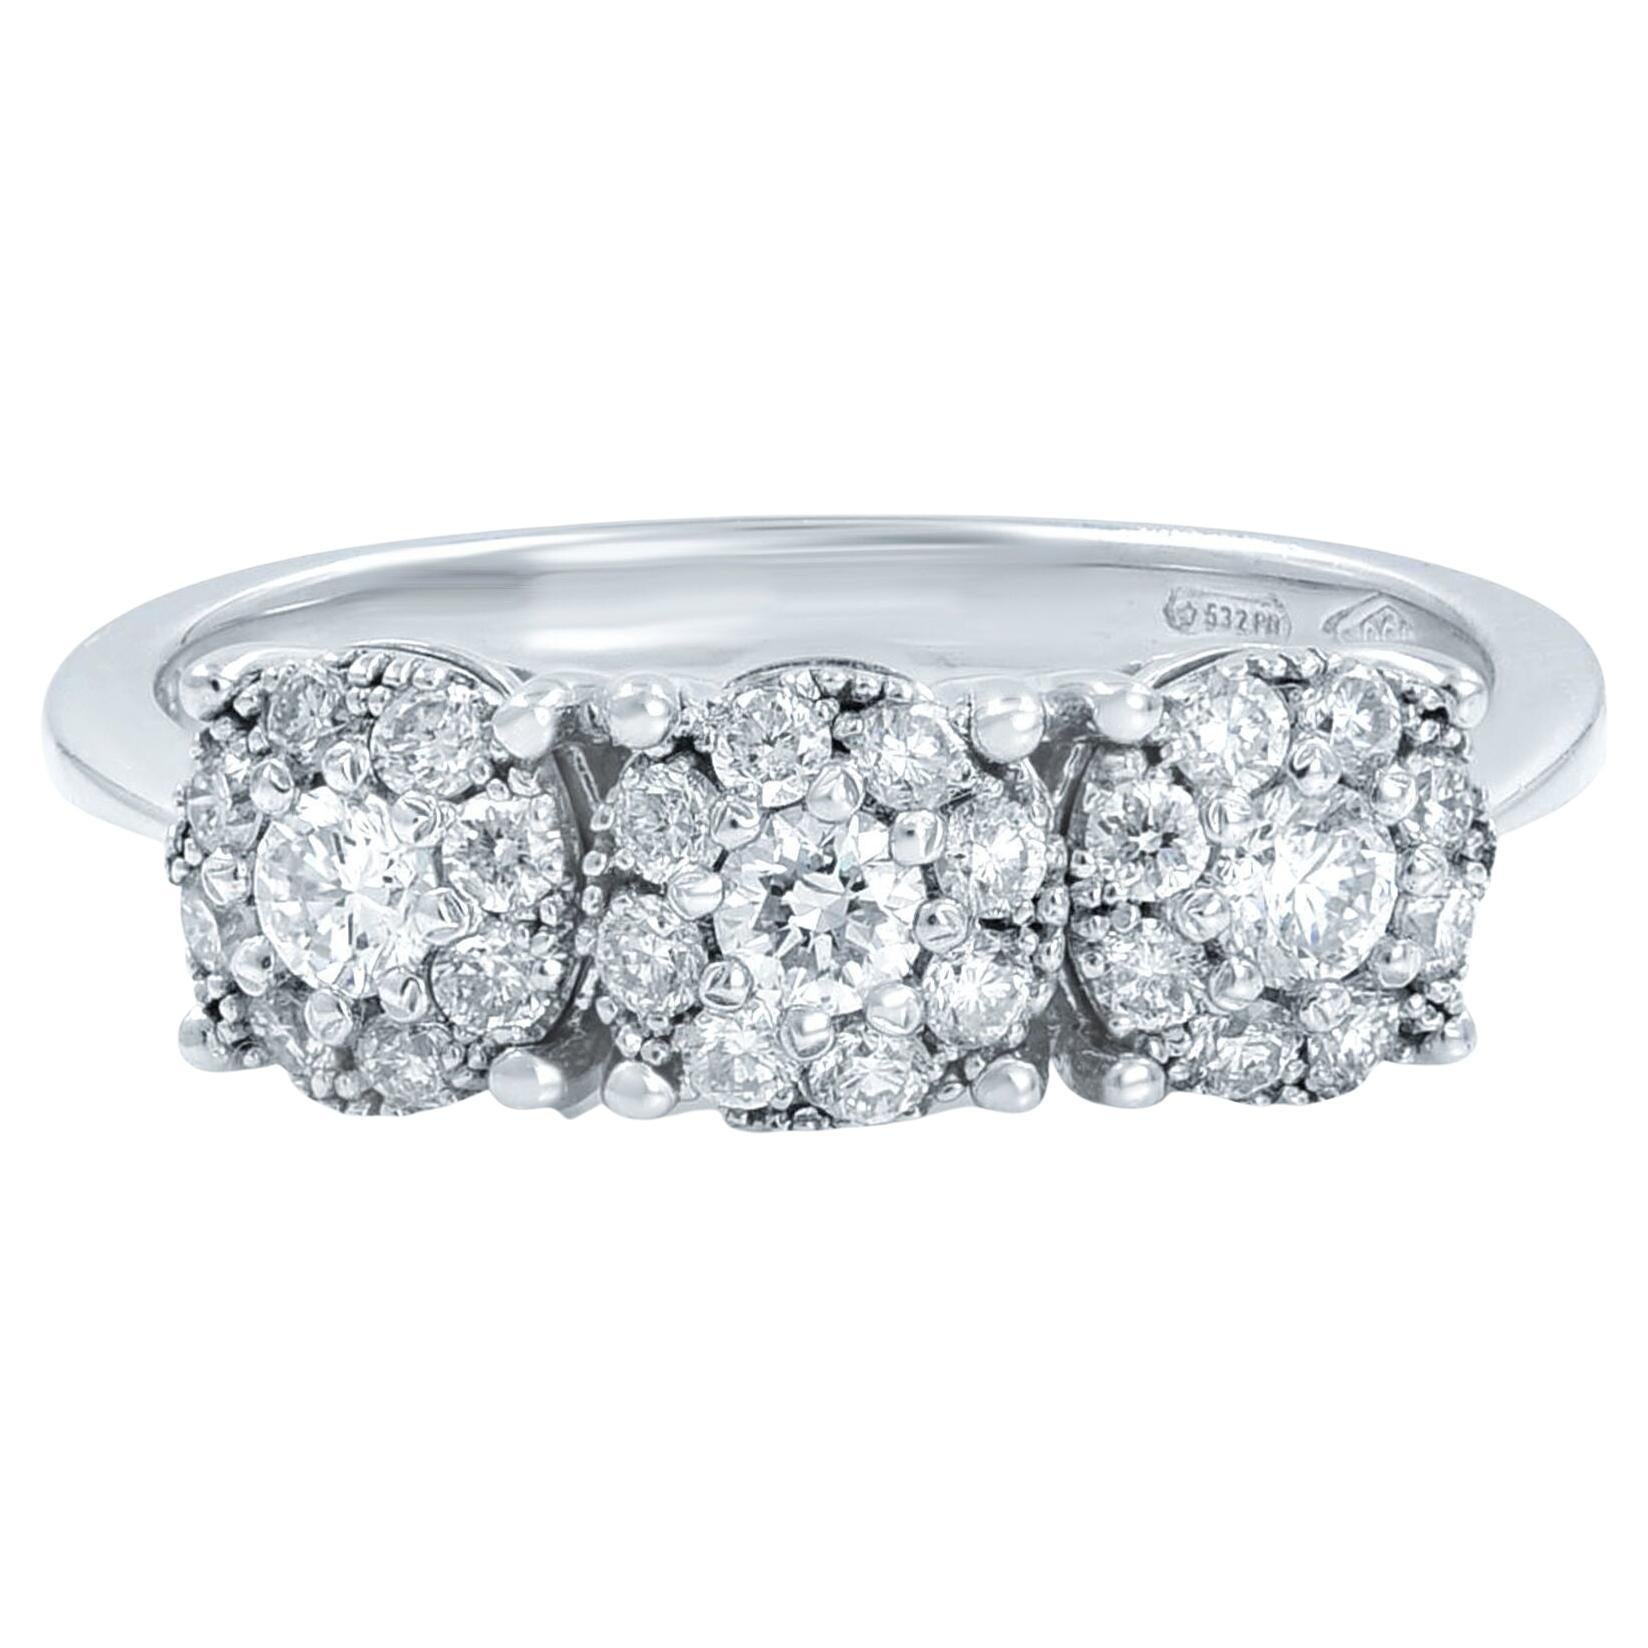 Rachel Koen Three Round Cluster Diamond Engagement Ring 18K White Gold 0.75cttw For Sale